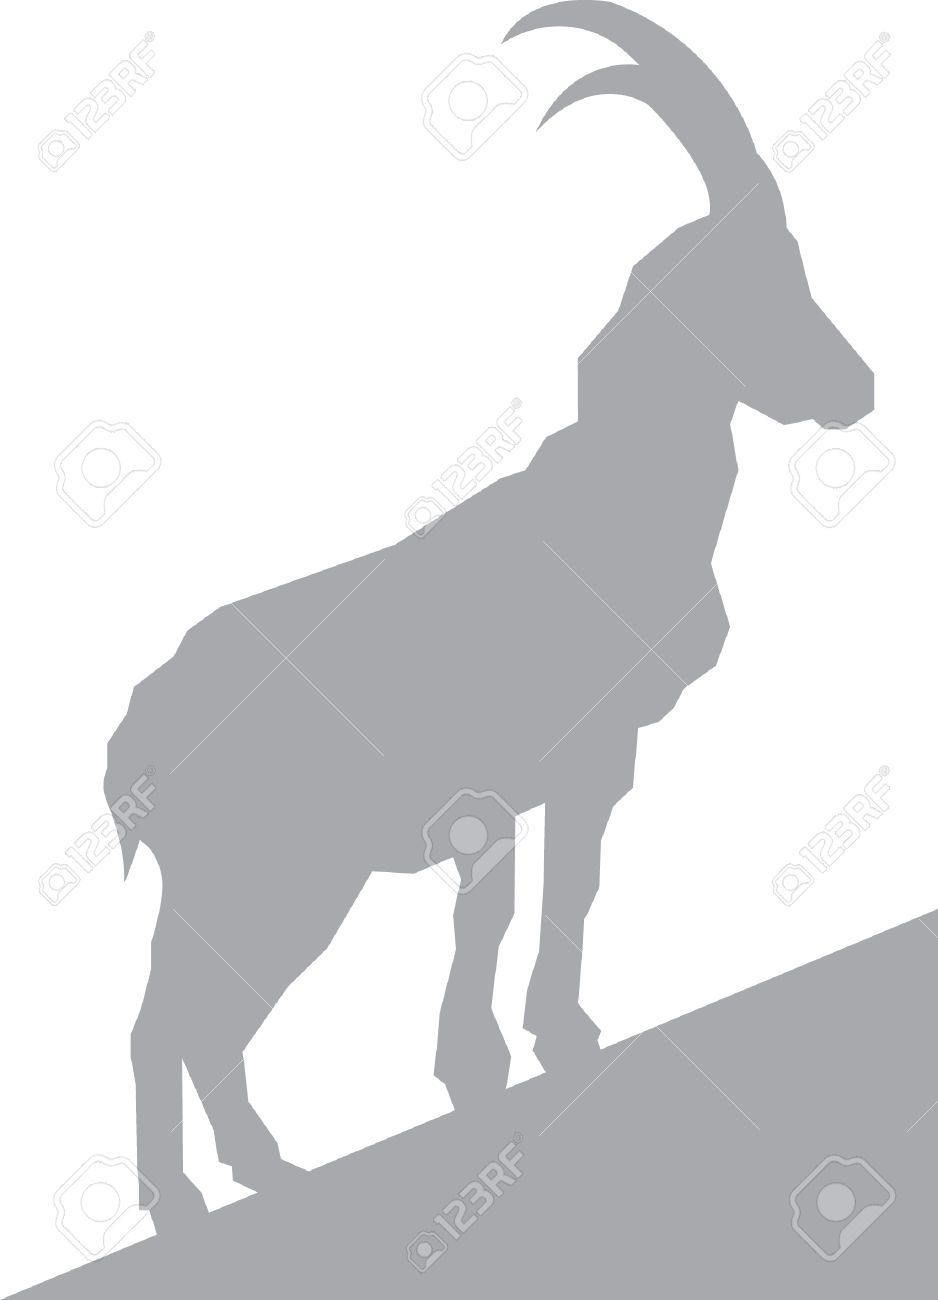 Mountain stock vector illustration. Goat clipart wild goat